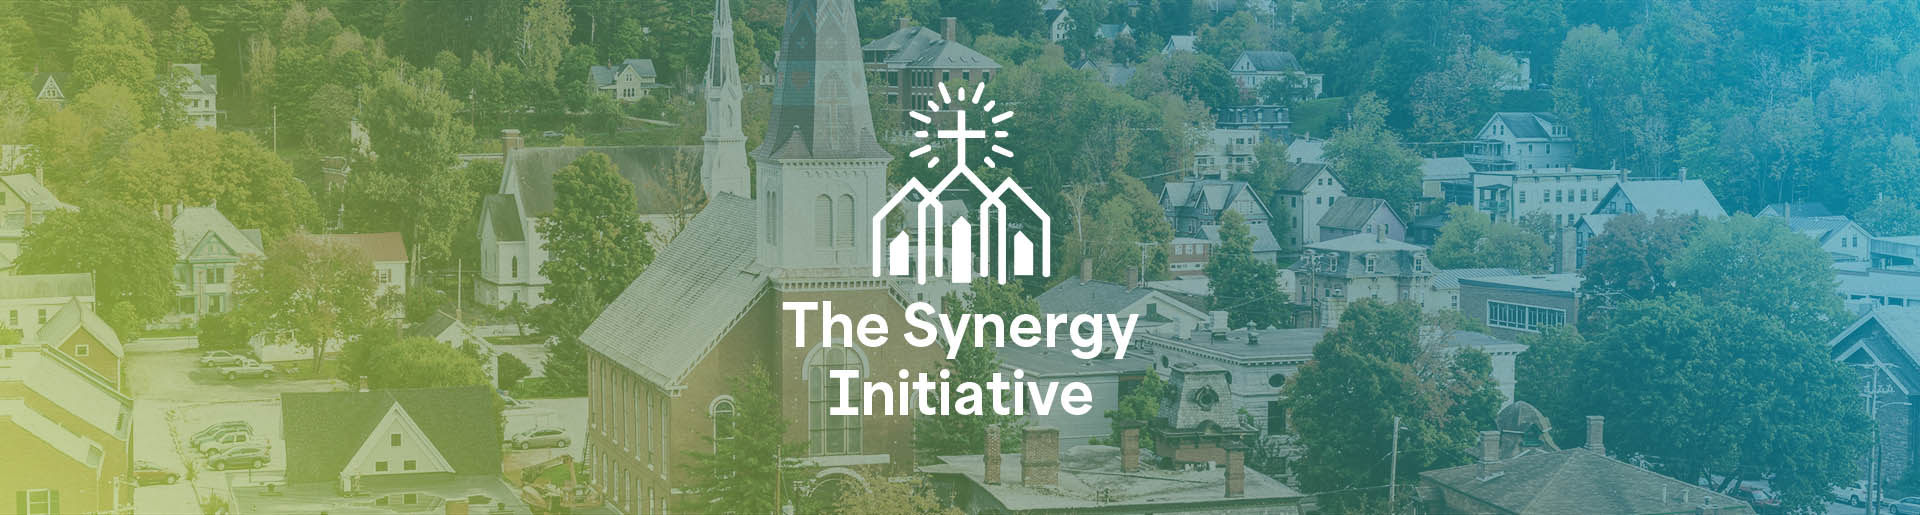 The Synergy Initiative Logo.